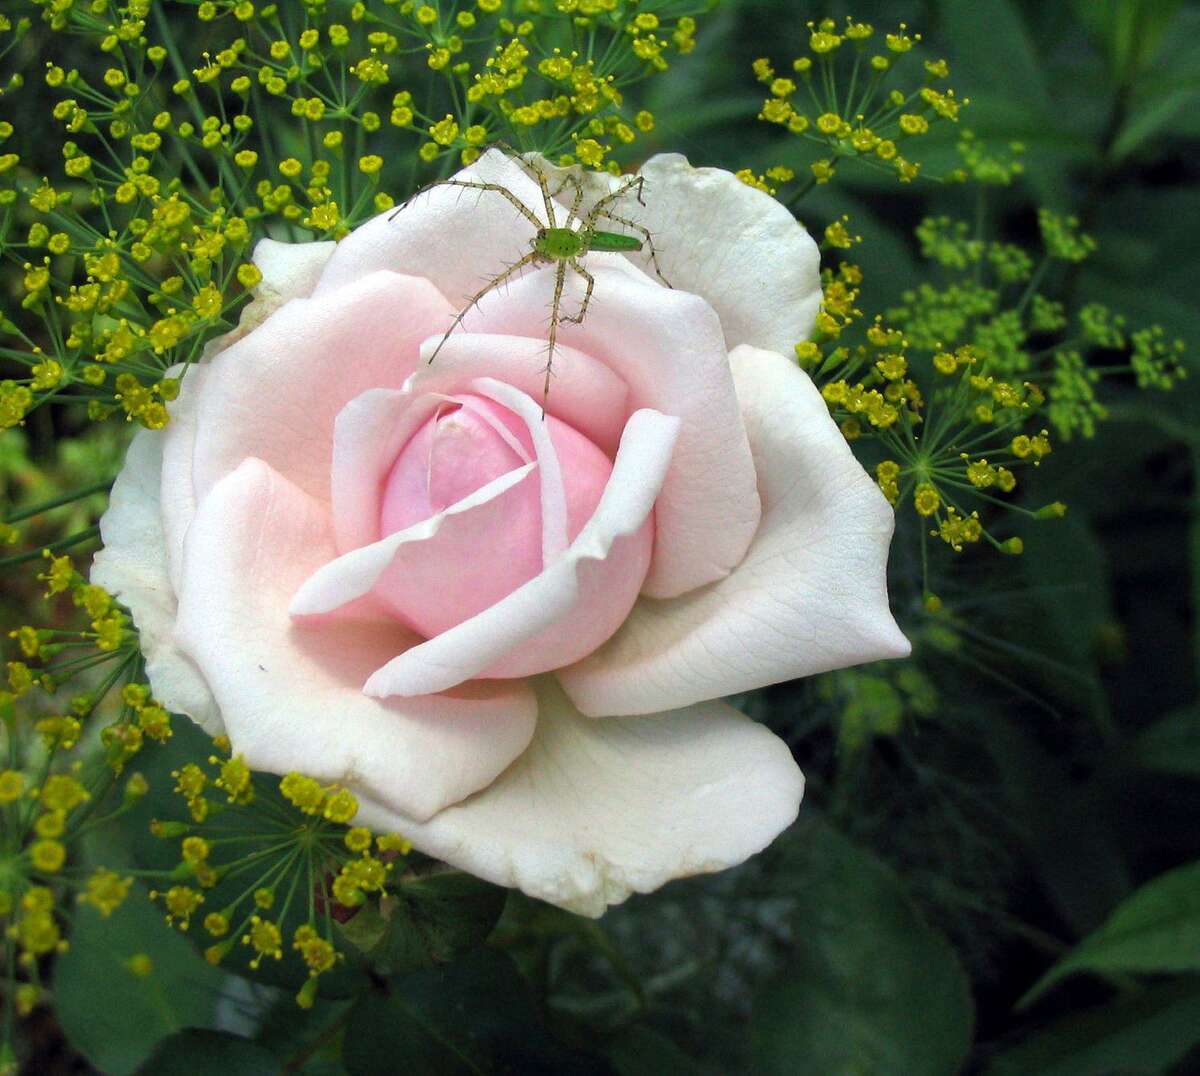 Souvenir de la Malmaison is a small Bourbon rose that Josephine grew in her garden at Château de Malmaison in France. The rose was created in 1843.